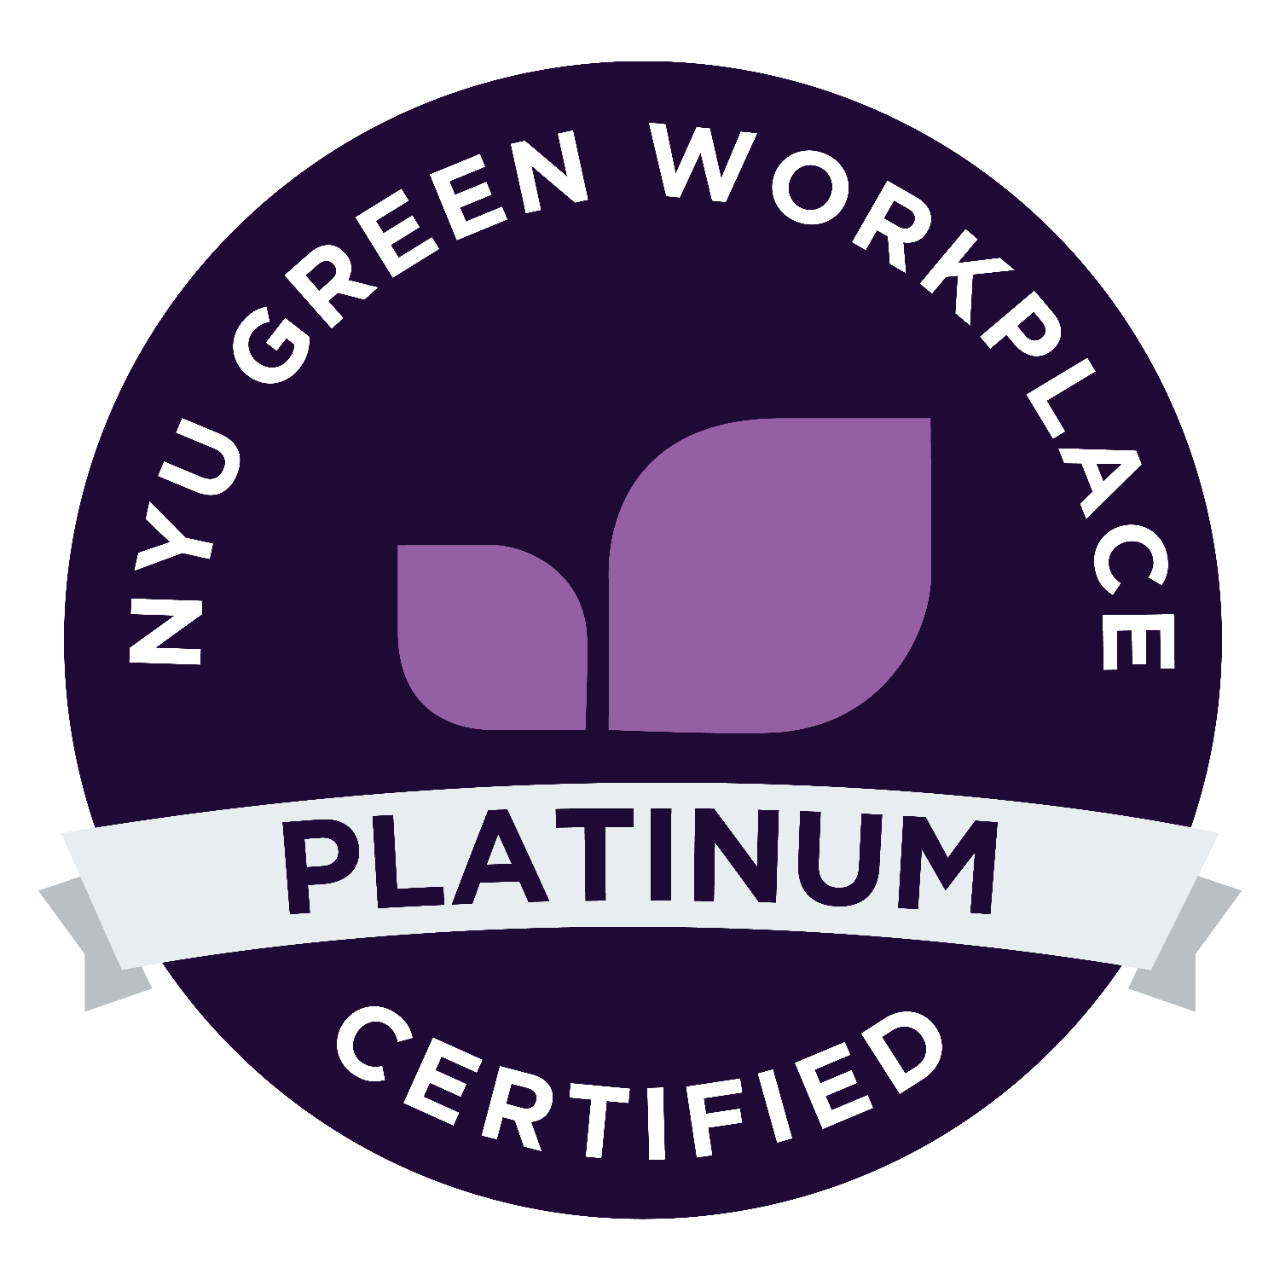 NYU Green Workplace Platinum Certified